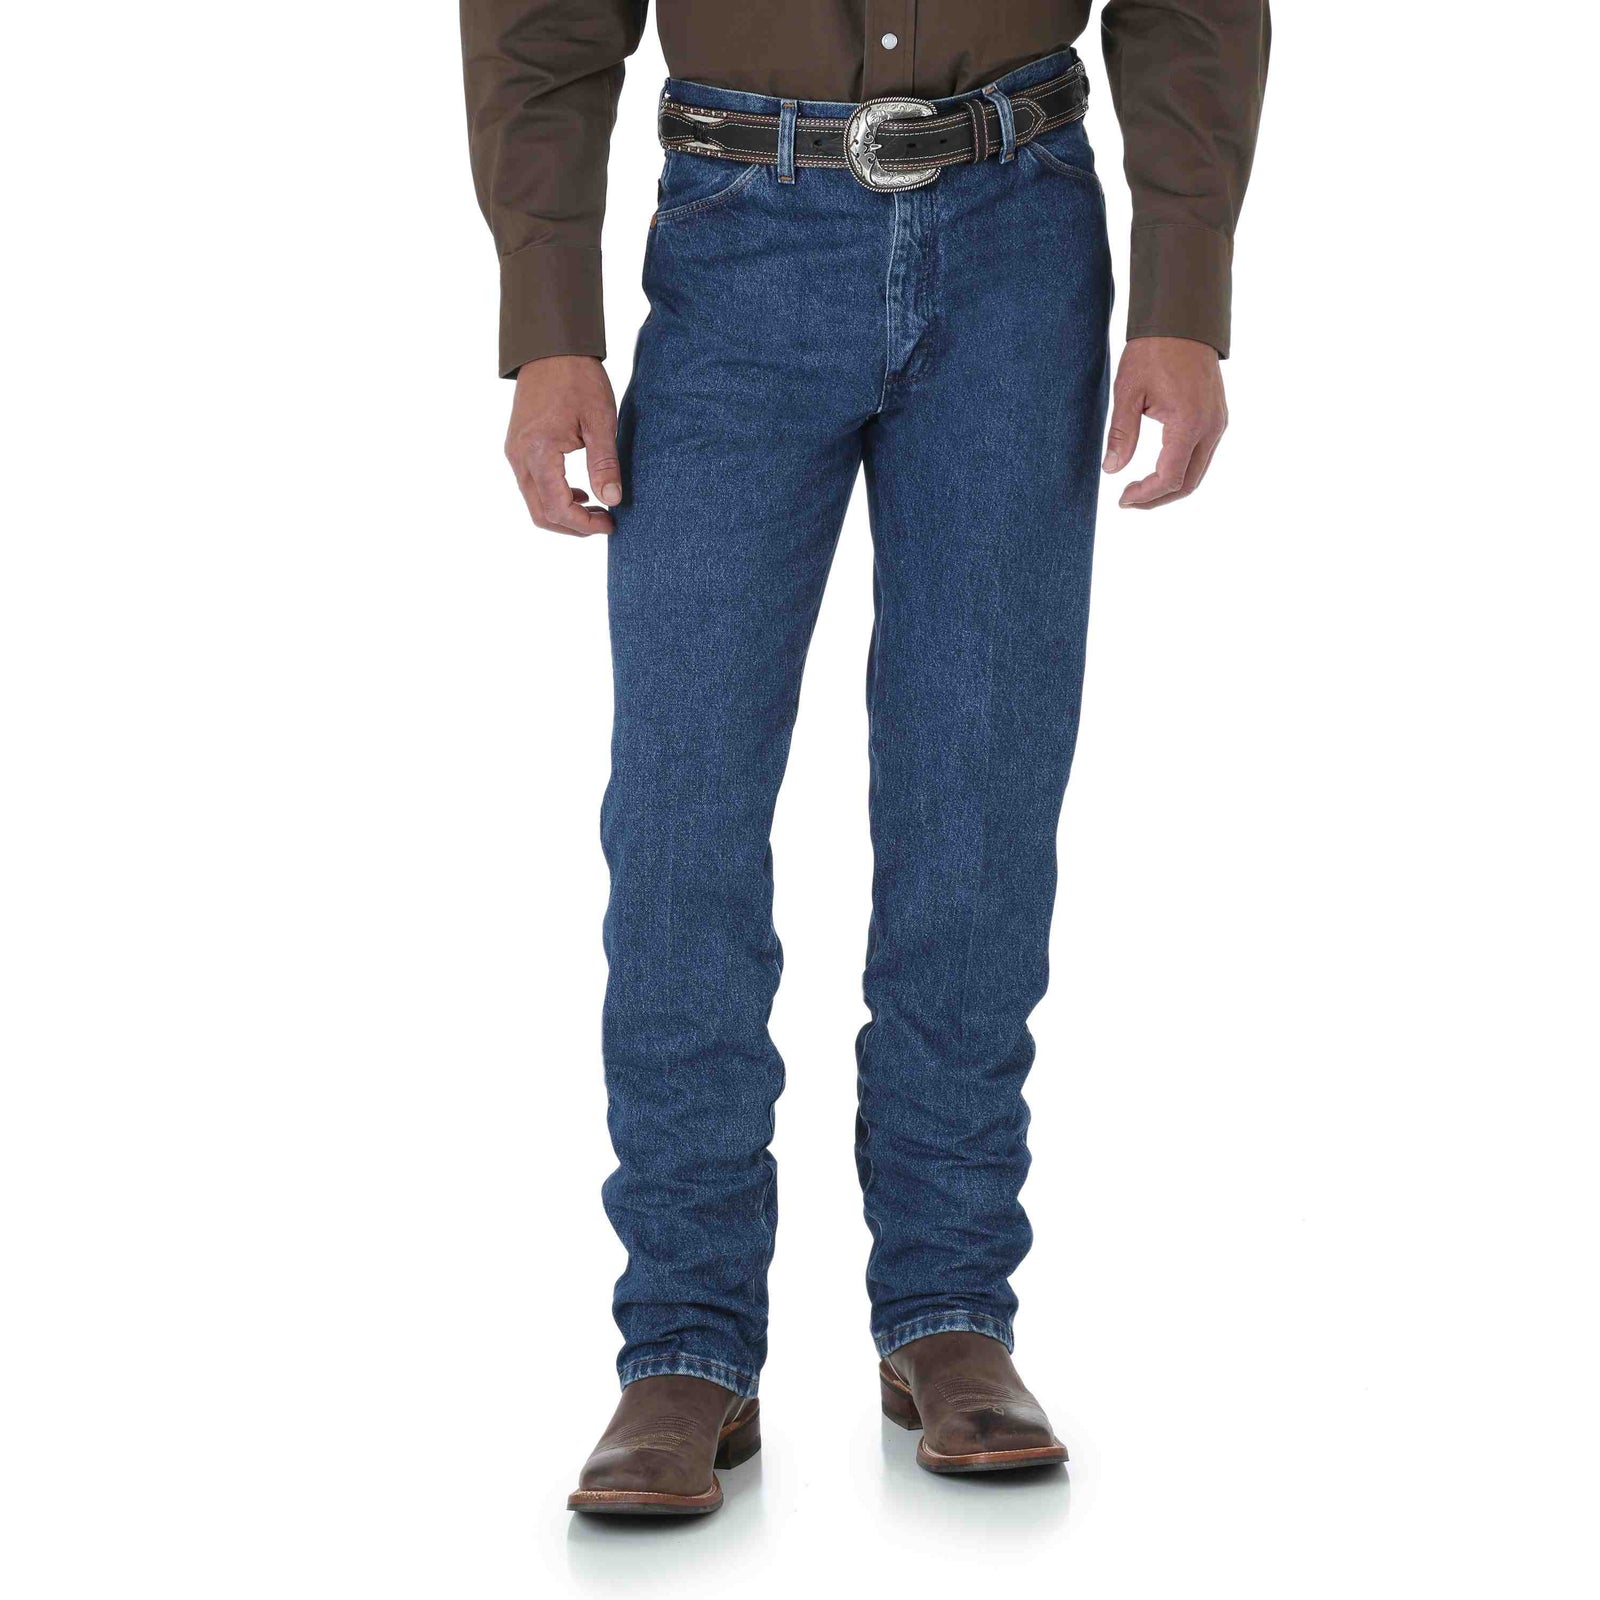 Jeans for Men  Wrangler Denim Jeans - Russell's Western Wear, Inc.